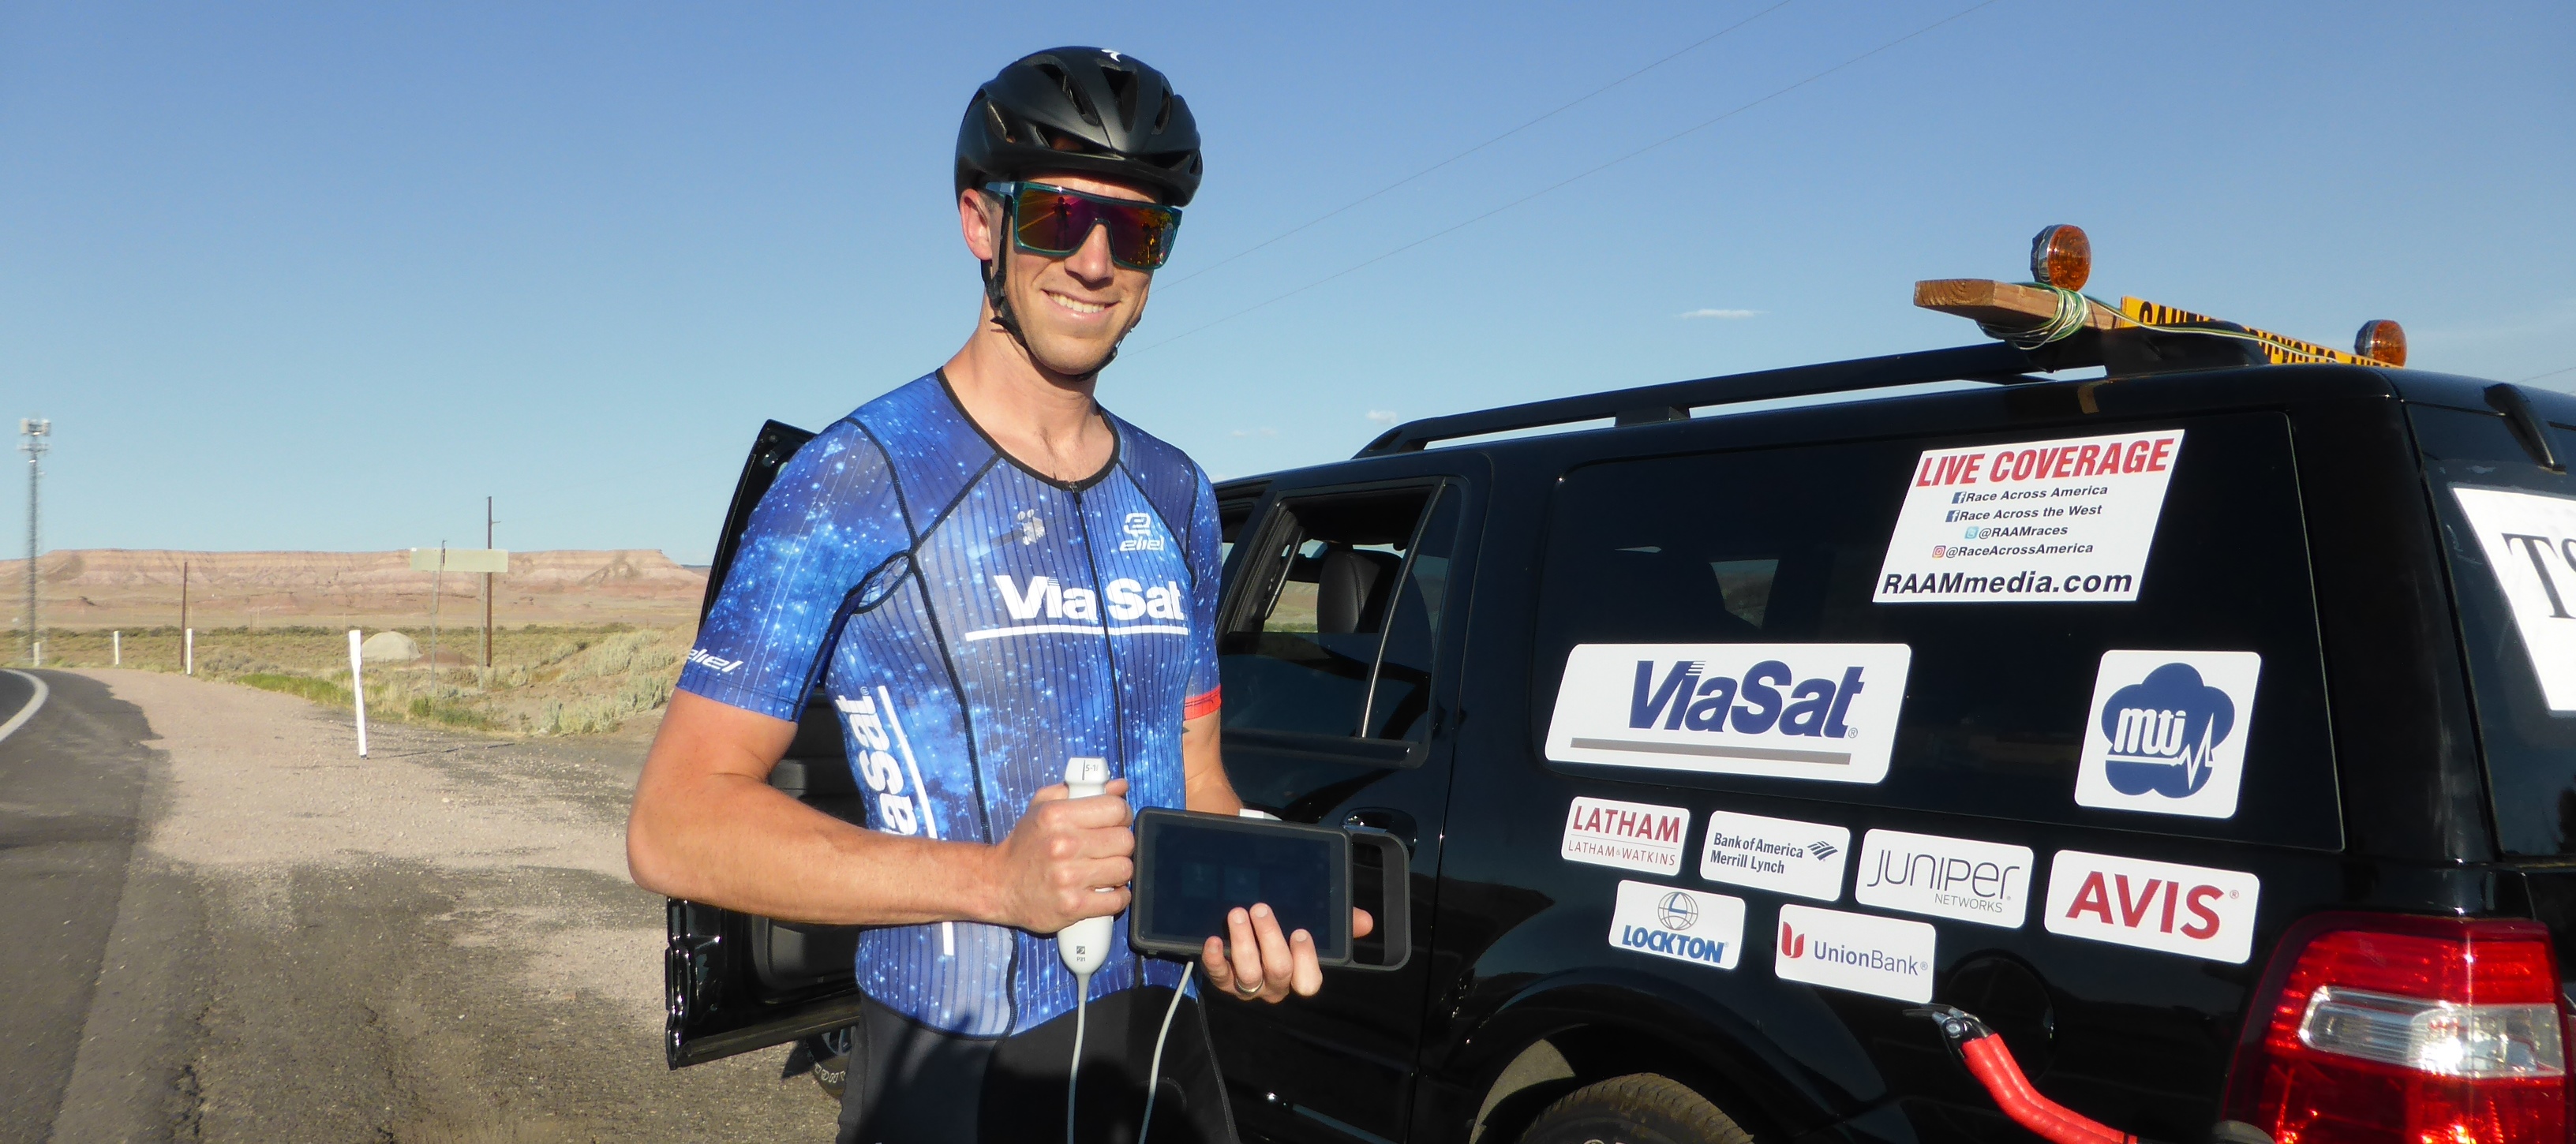 Sonosite iViz Ultrasound Machine Held by Bicyclist at Race Across America Bike Race